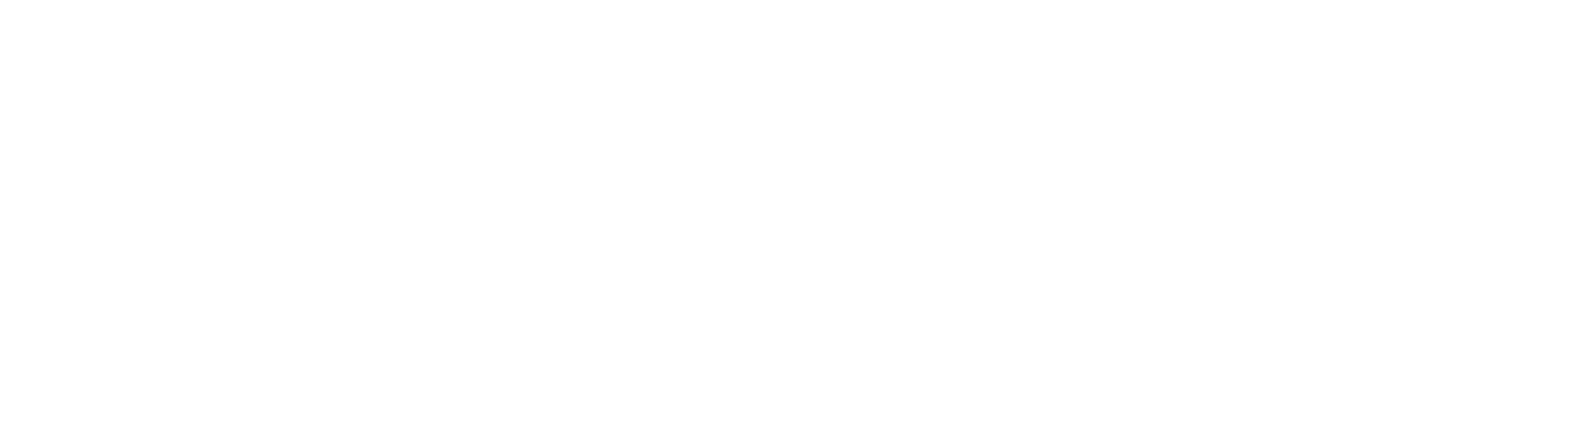 TrustCo Bank Logo groß für dunkle Hintergründe (transparentes PNG)